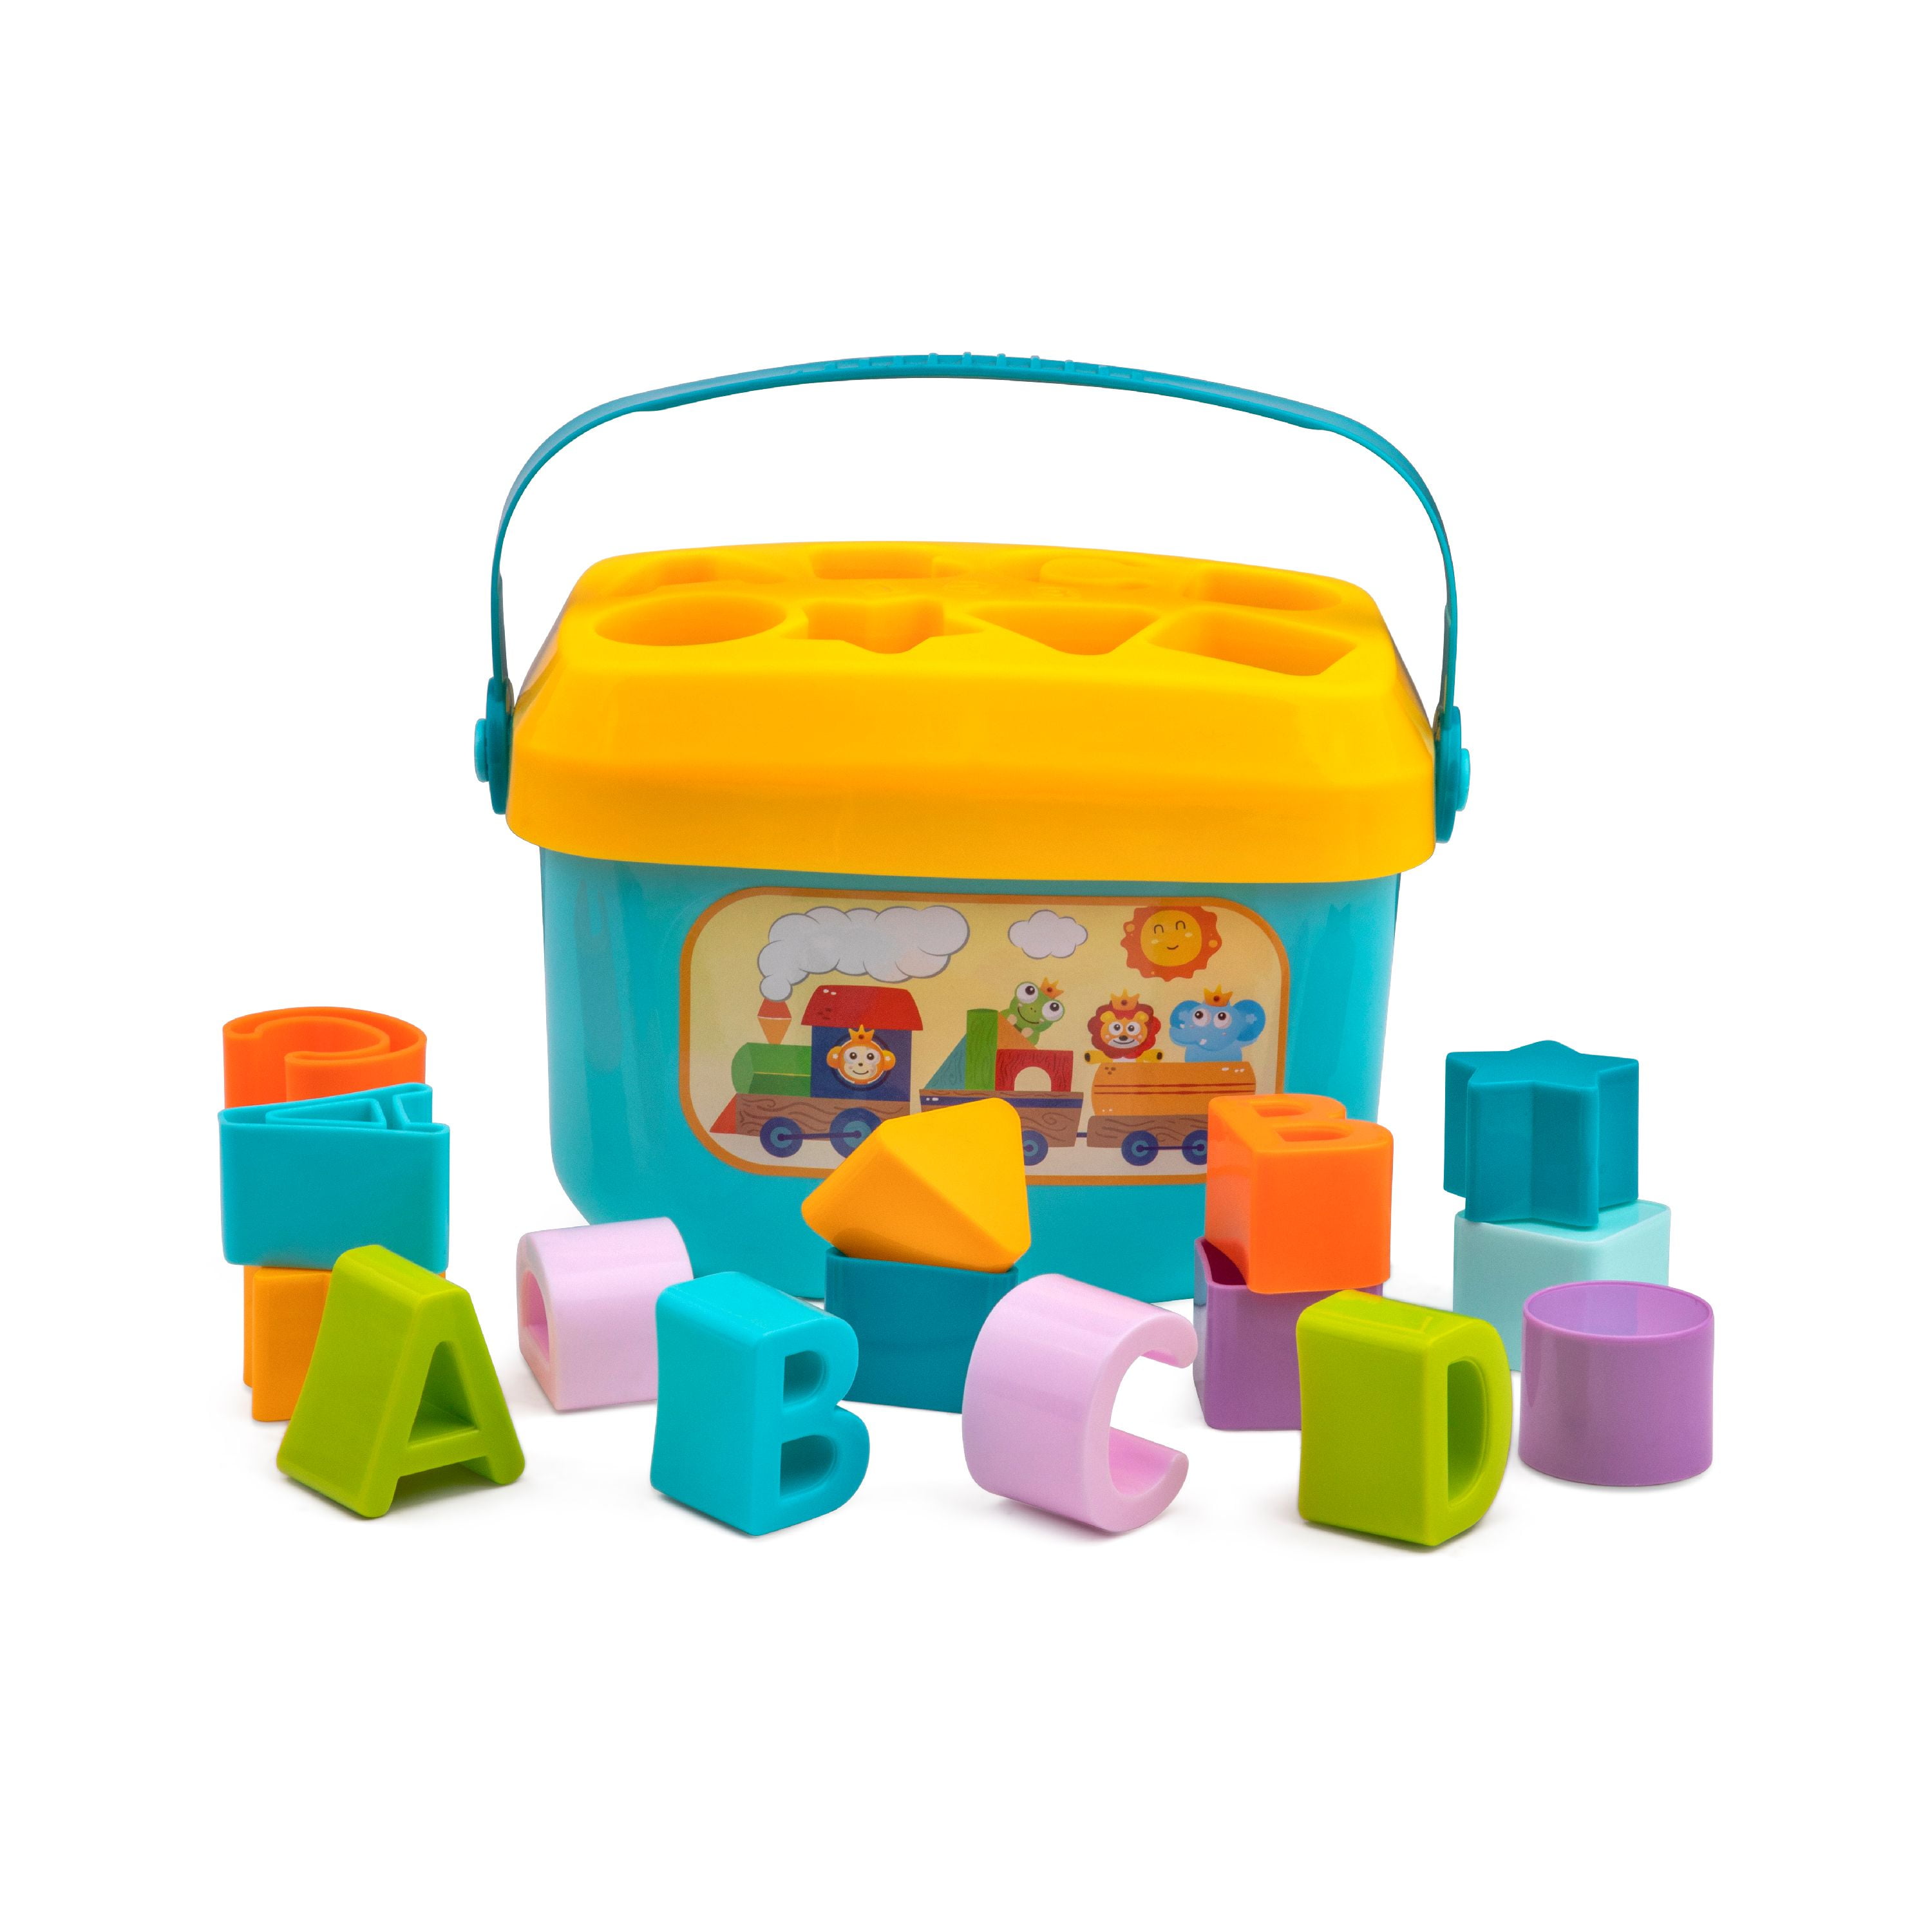 Vtech SORT & DISCOVER DRUM Educational Preschool Young Child Toy BNIB 